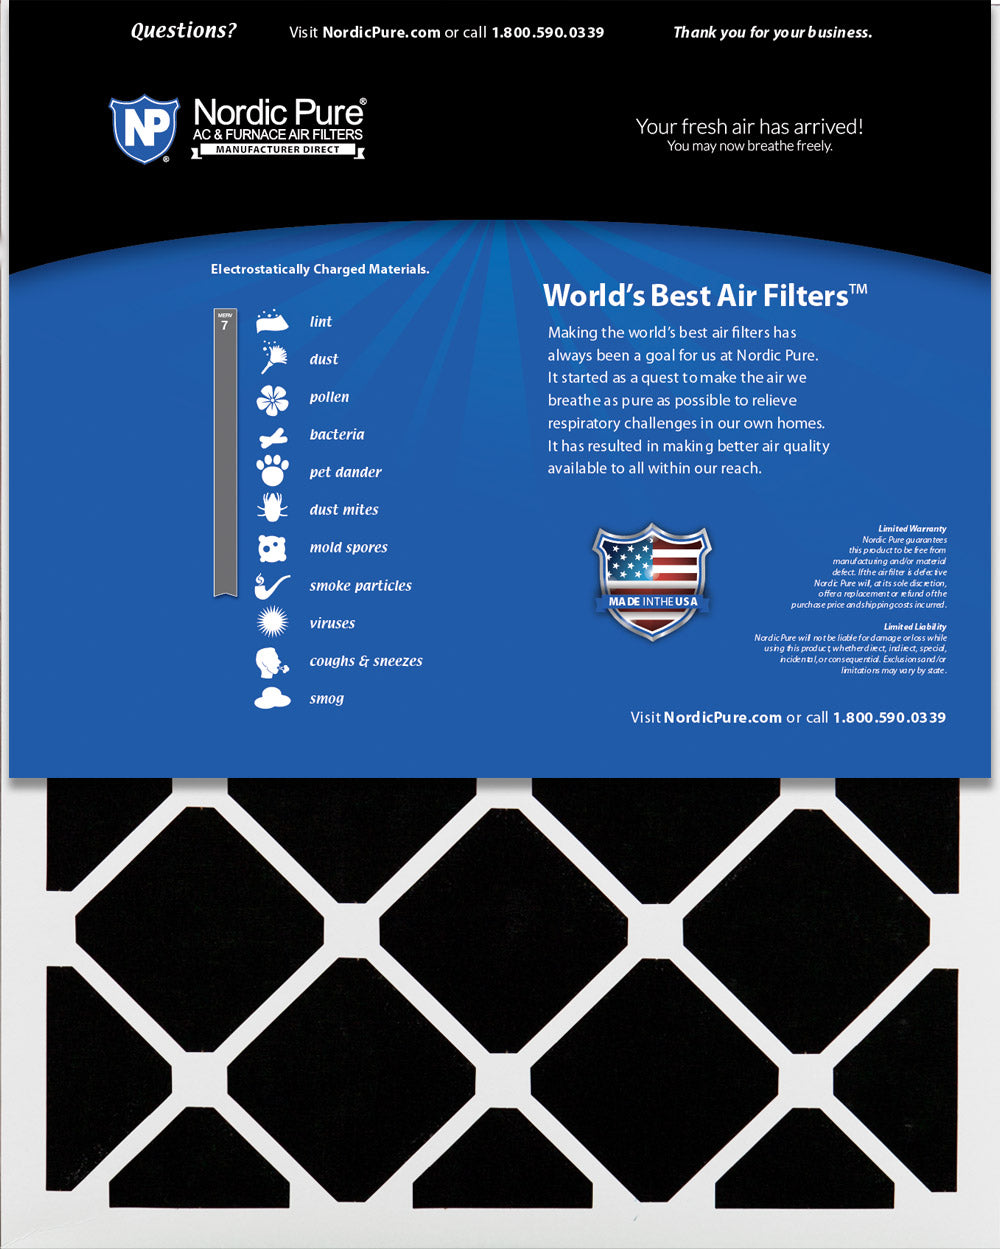 23x25x1 Exact MERV 7 Plus Carbon AC Furnace Filters